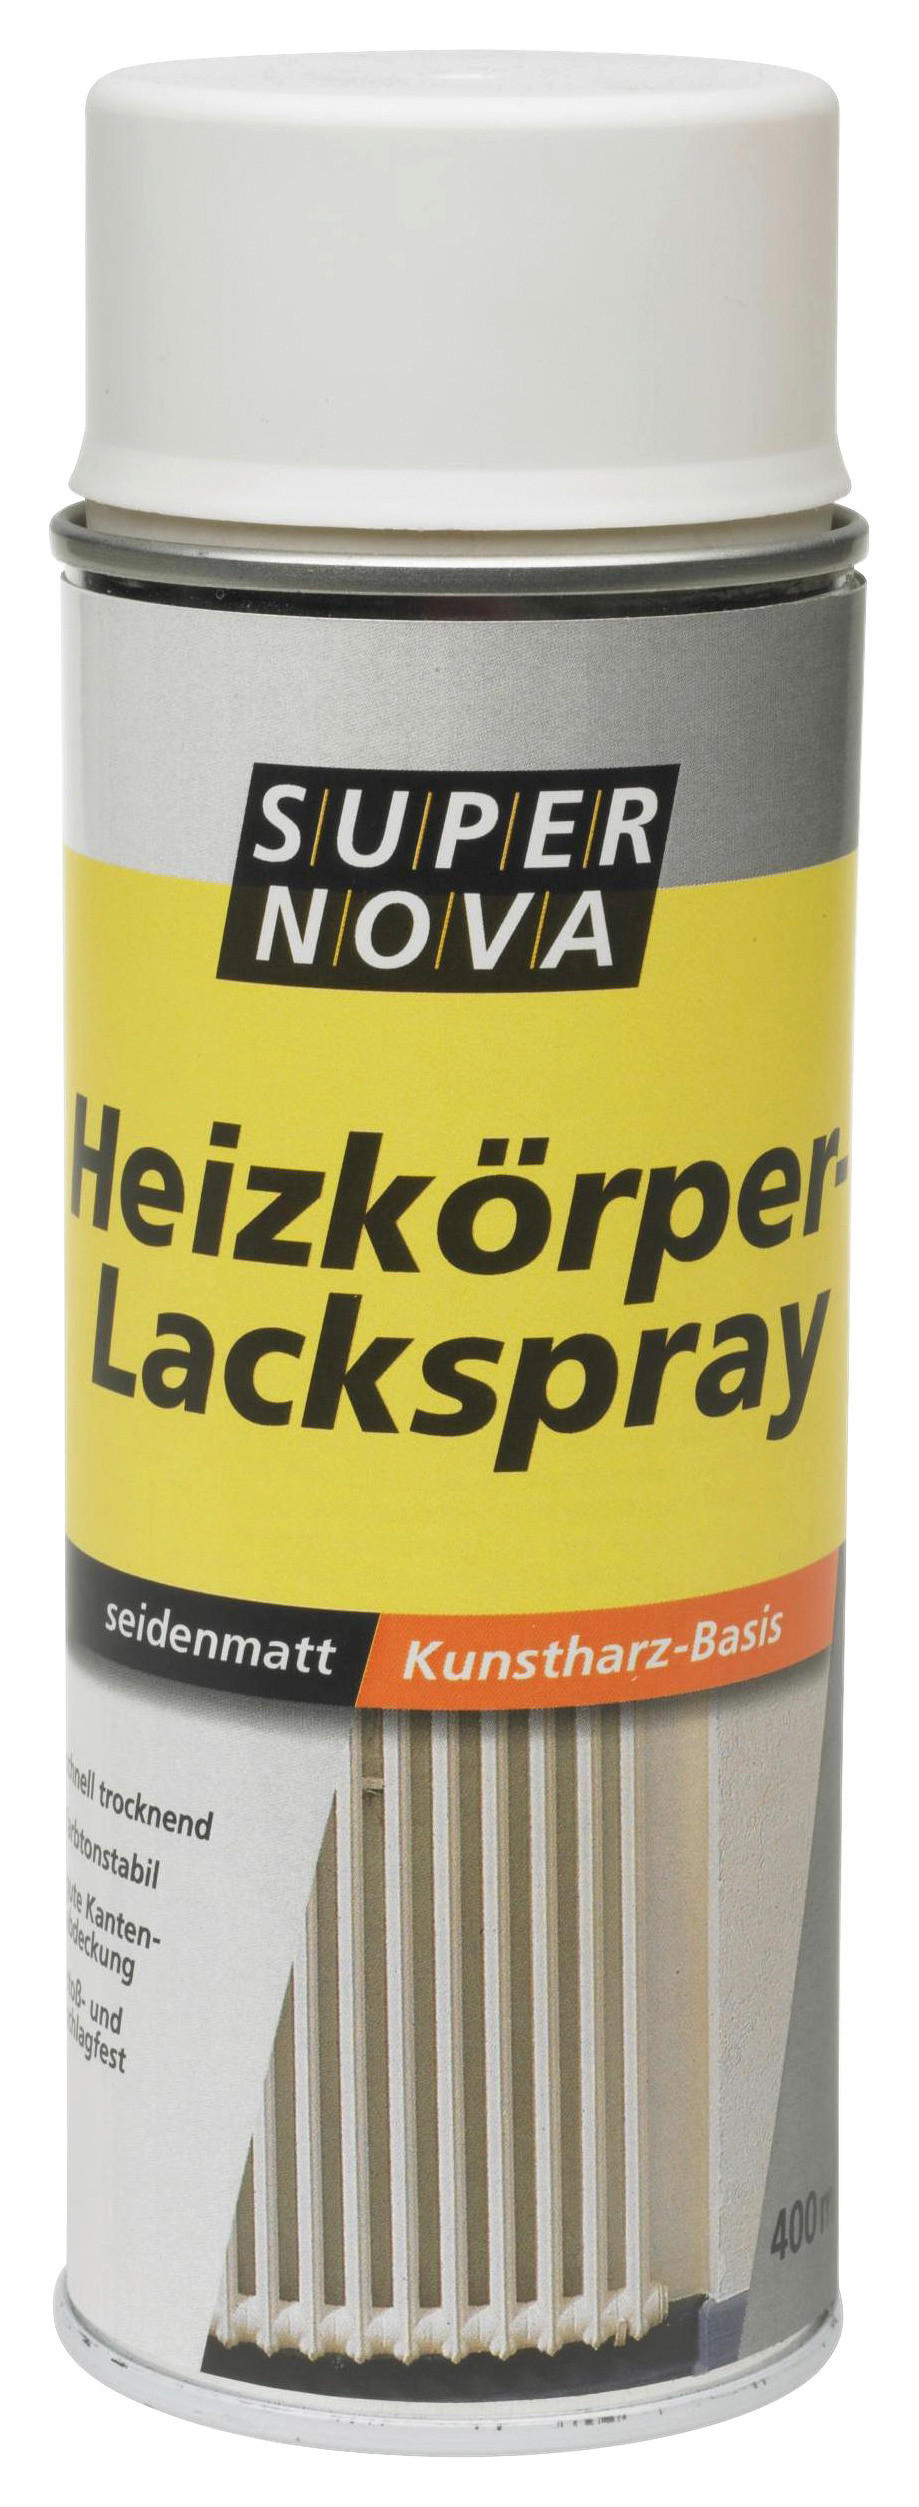 Lackspray Klarlack seidenmatt Acrylbasis 400 ml Spraydose, 5,99 €